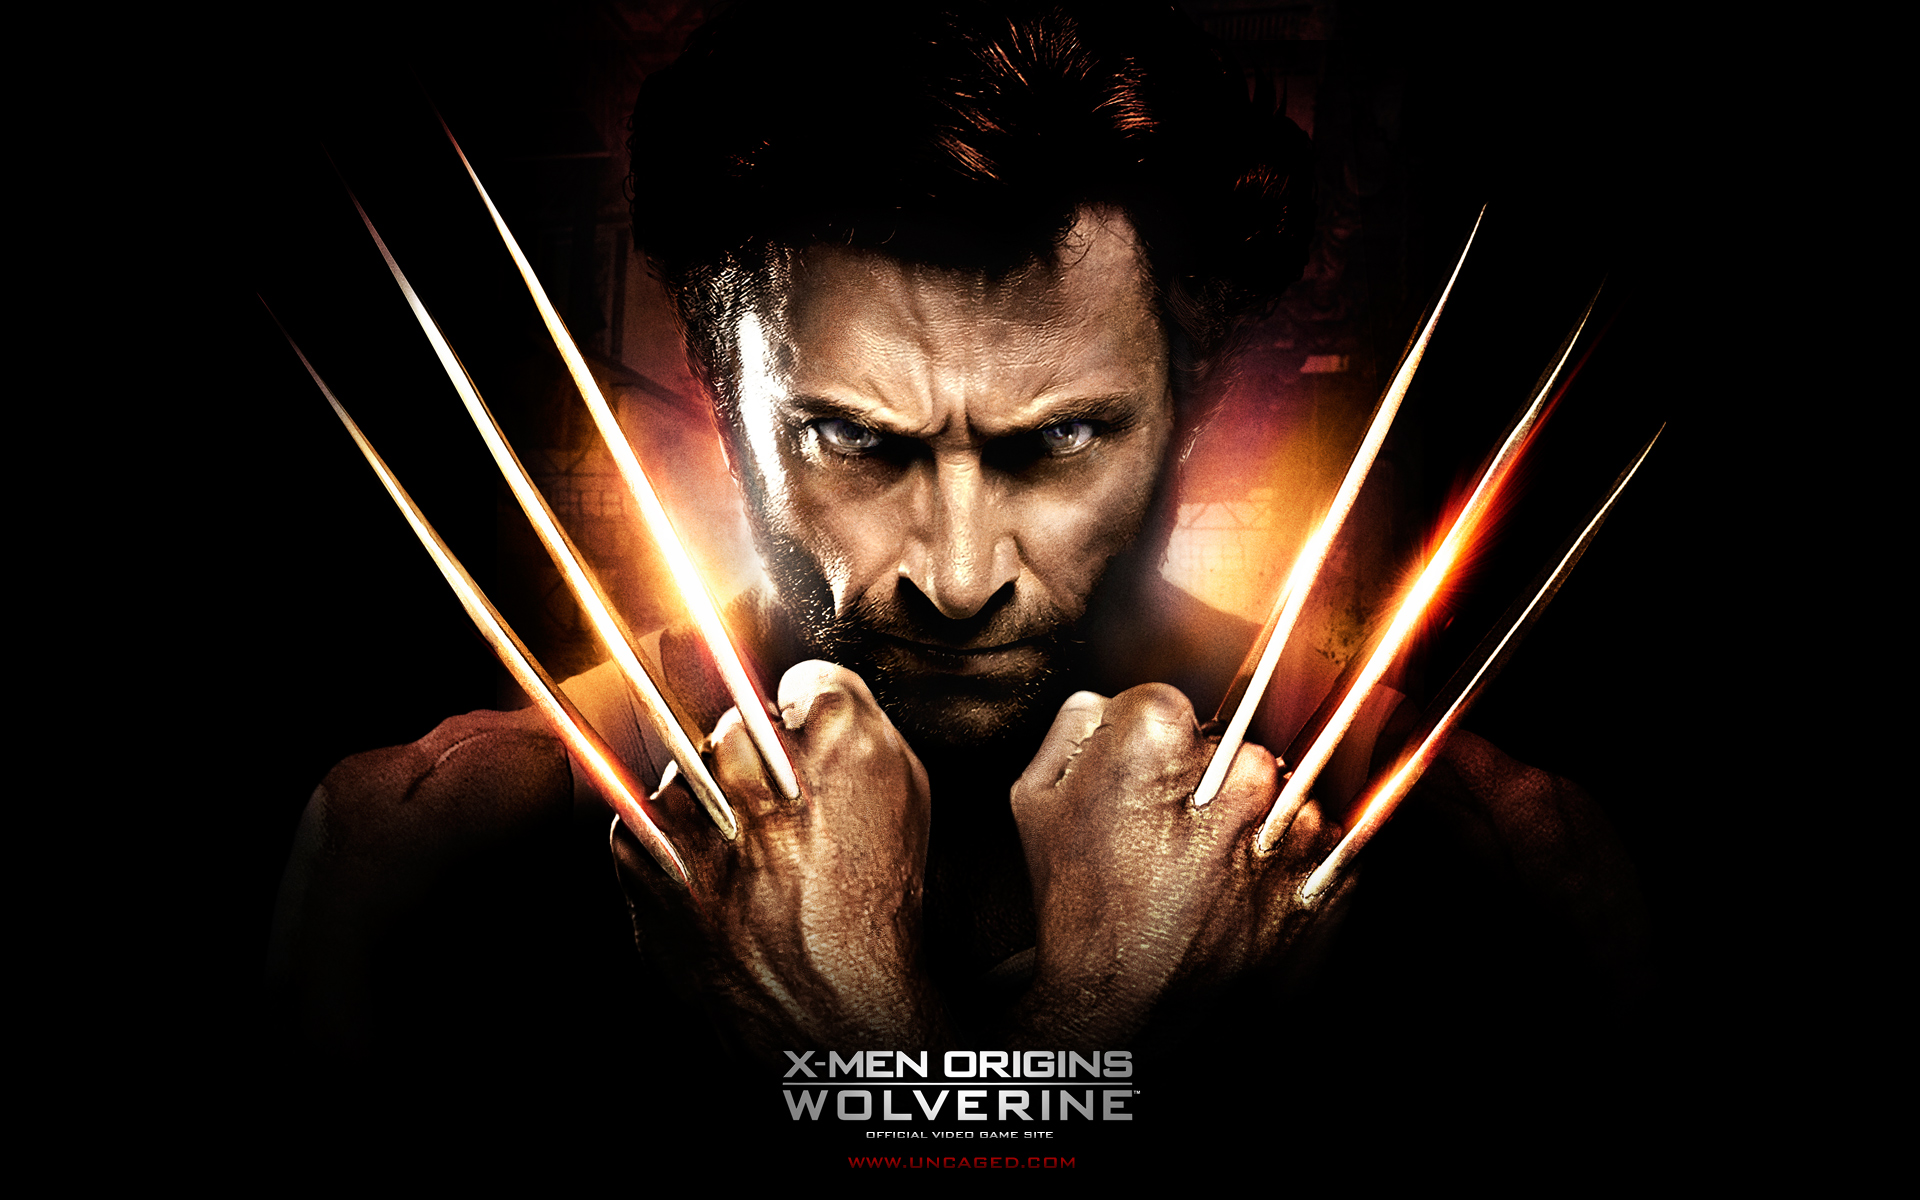 X Men Origins Wolverine Wallpaper High Quality #fz15n - ARASPOT.com